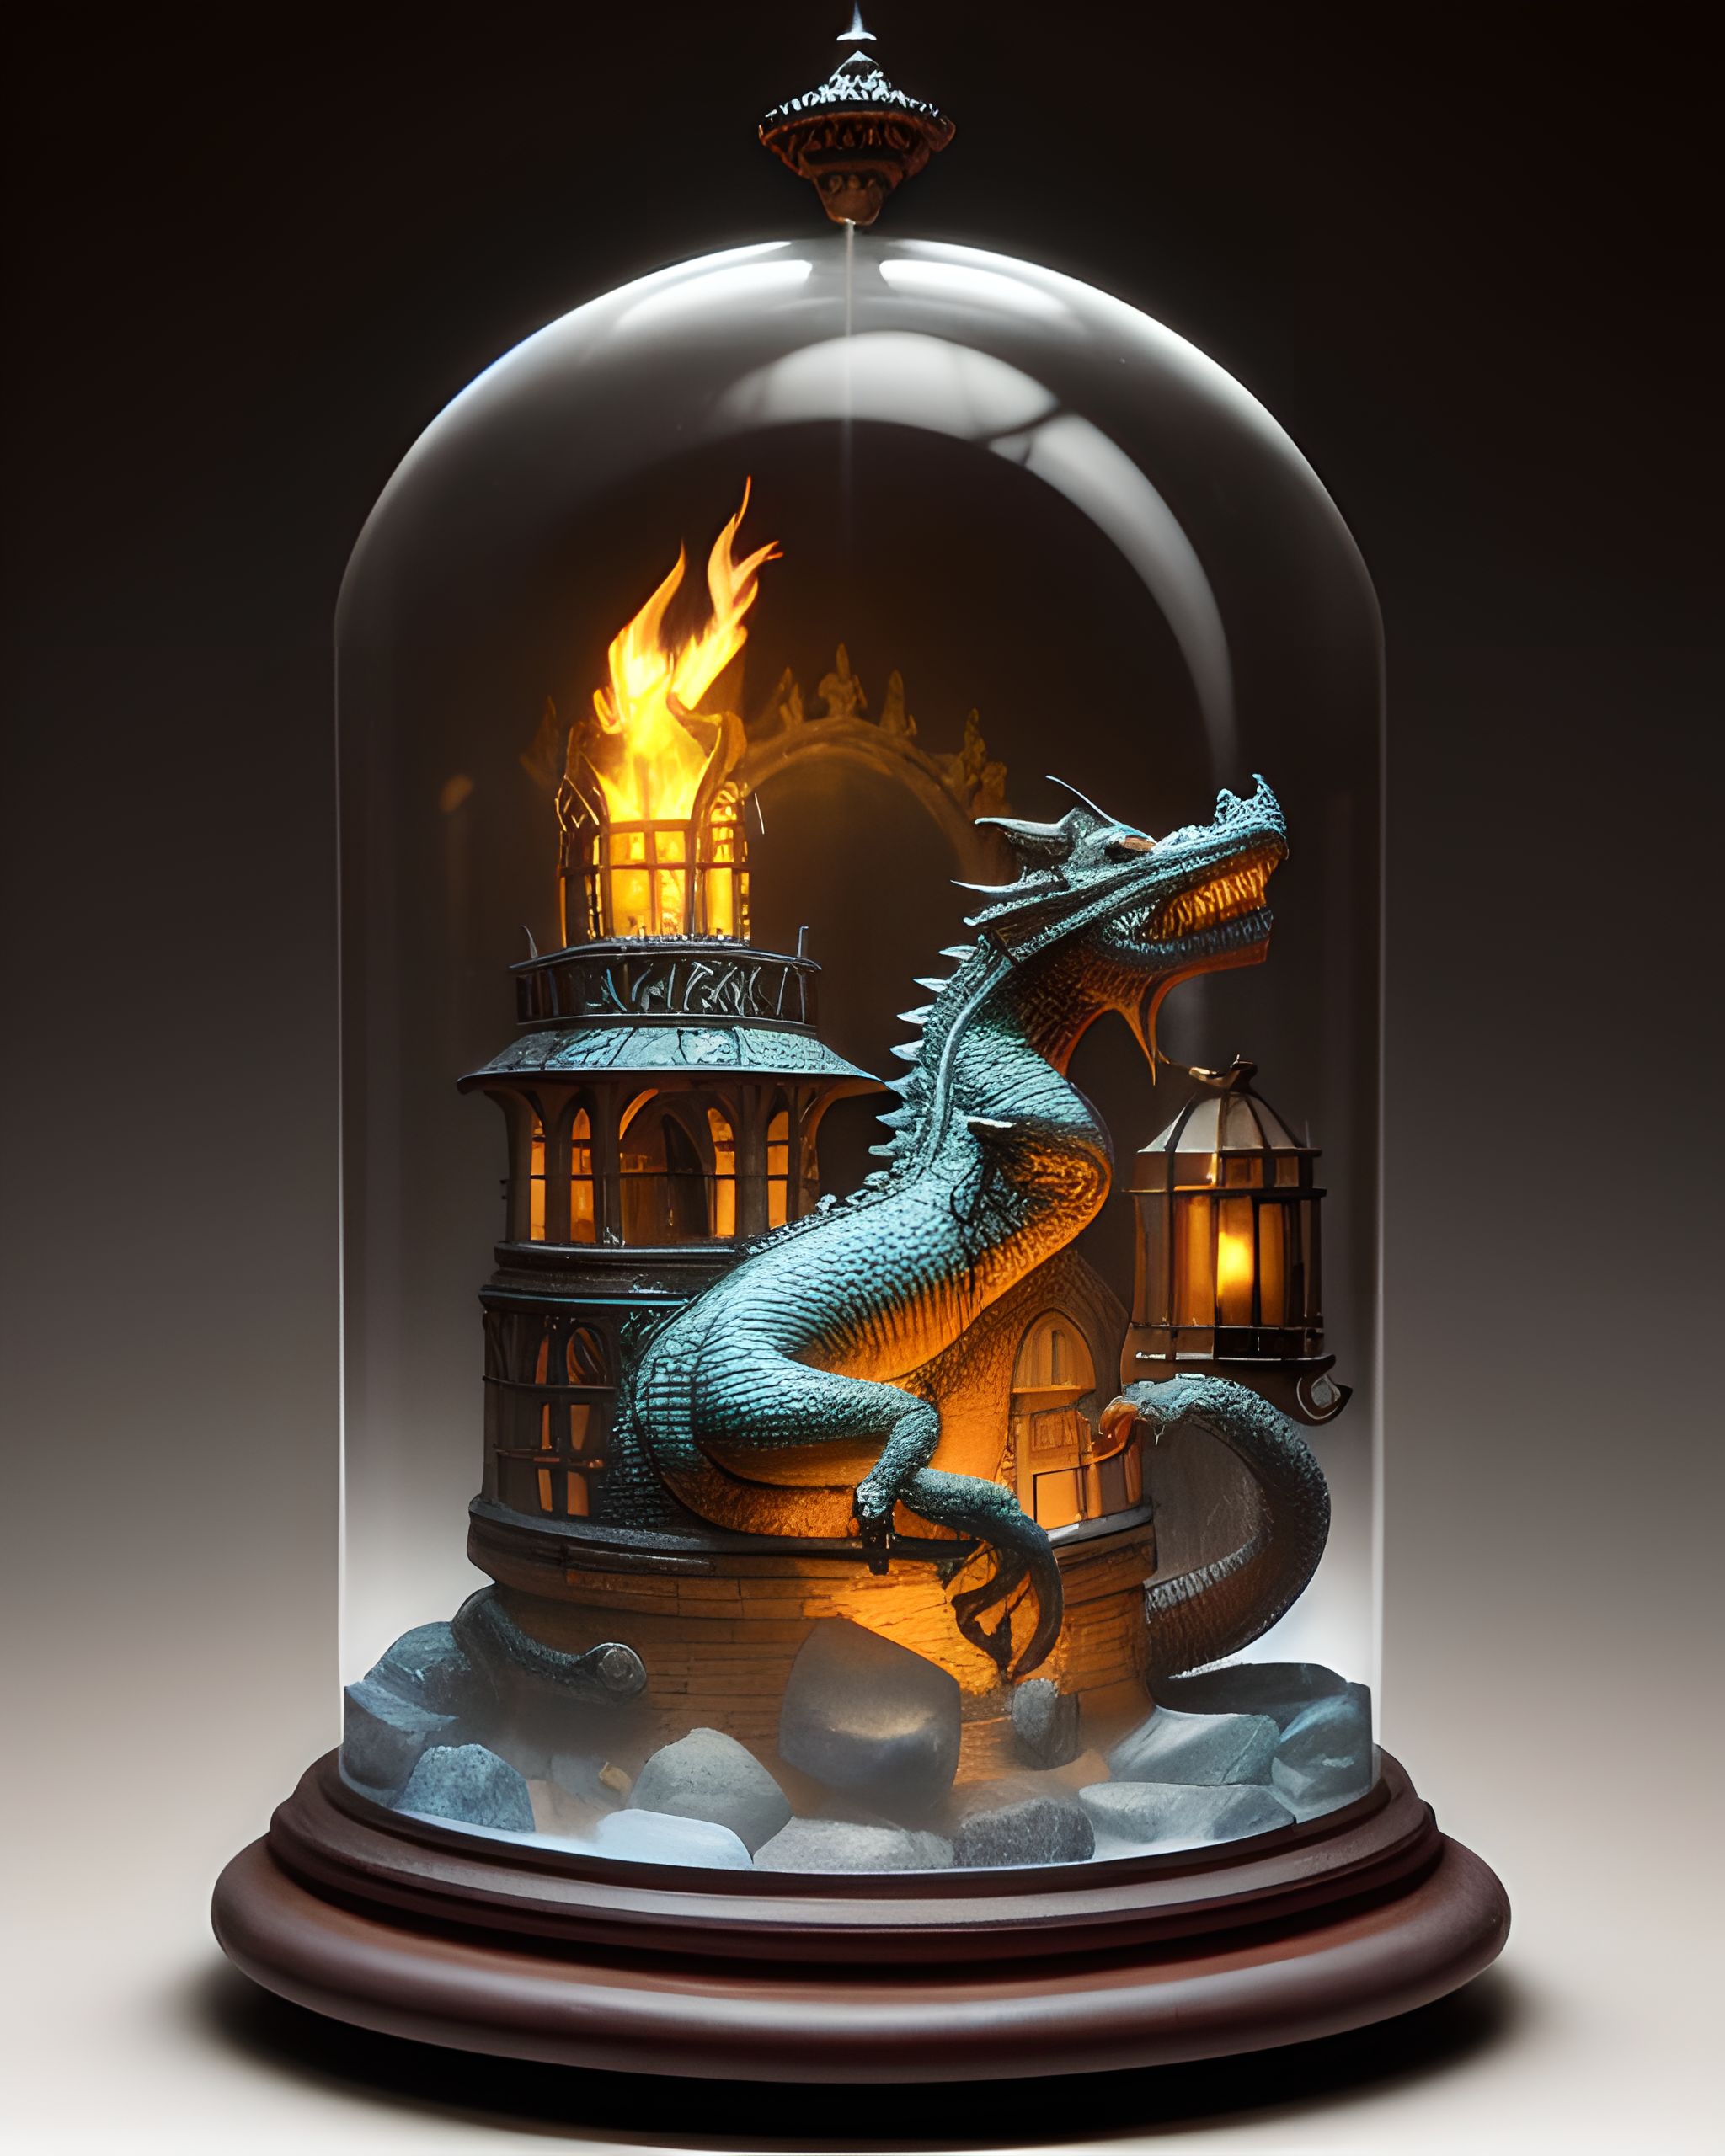 Dragon Lamp, Nemesis Now by dashinvaine on DeviantArt